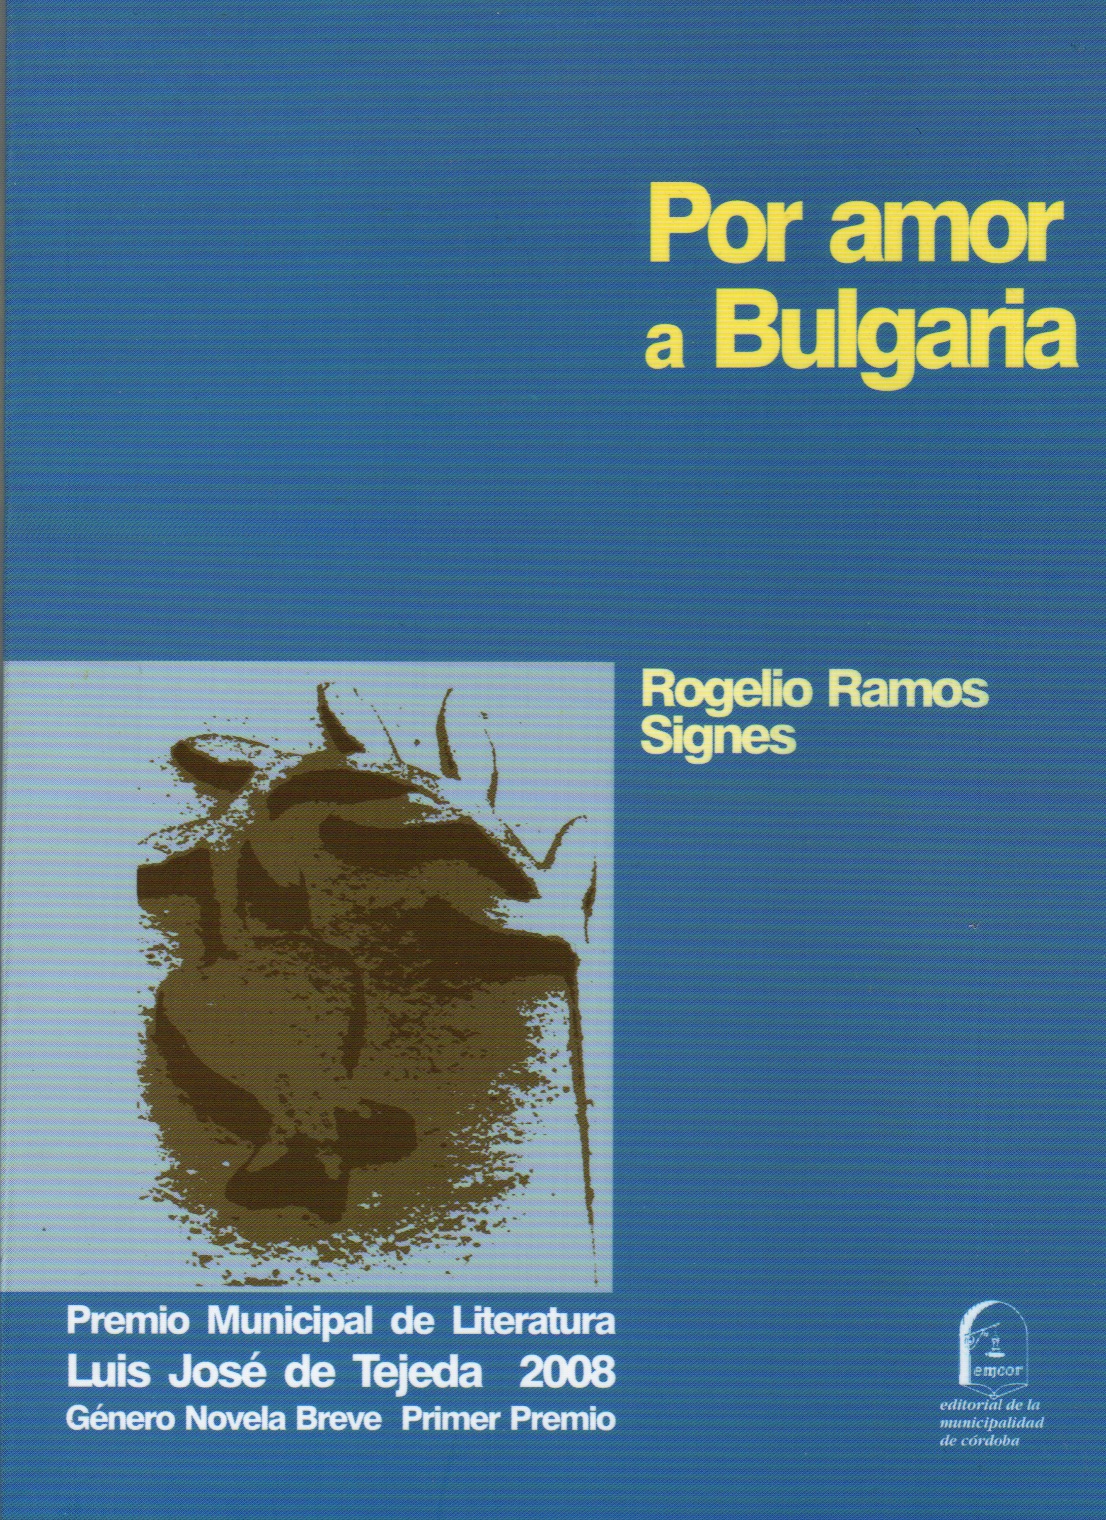 Libro Ramos Signes 10 - Por amor a Bulgaria - BMP copy